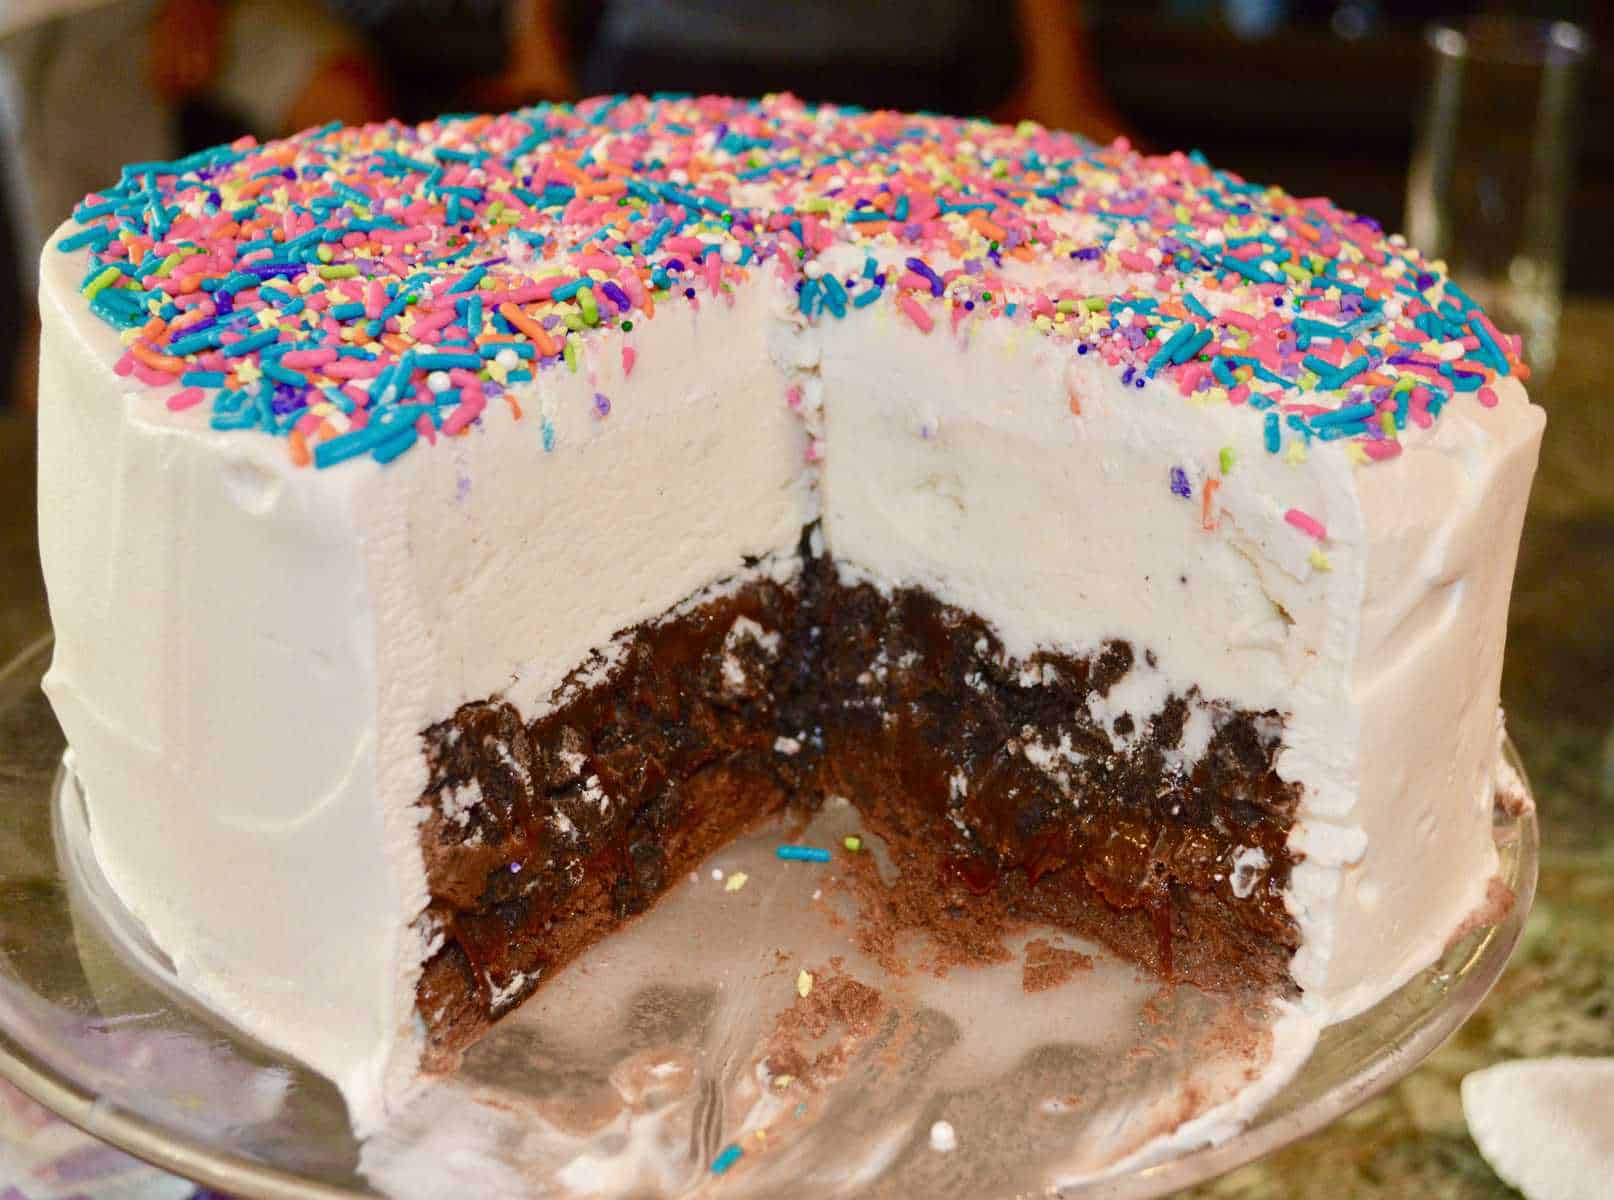 unicorn ice cream cake